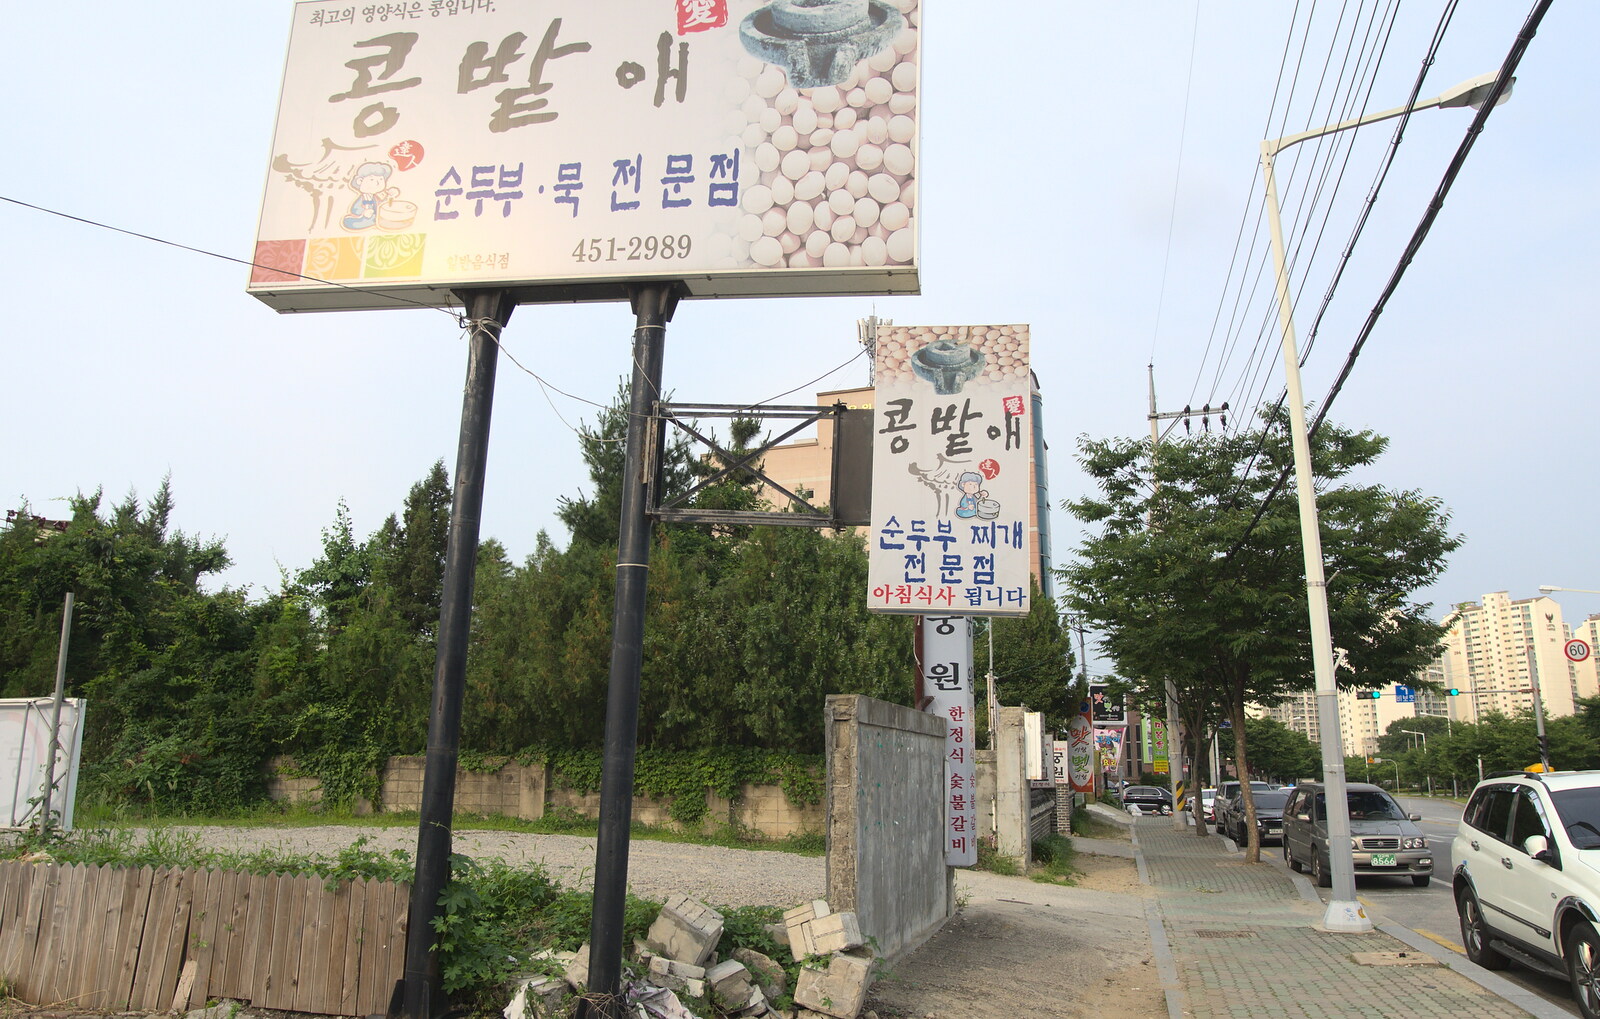 Korean restaurant signs from Working at Samsung, and Geumosan Mountain, Gumi, Gyeongsangbuk-do, Korea - 24th June 2012